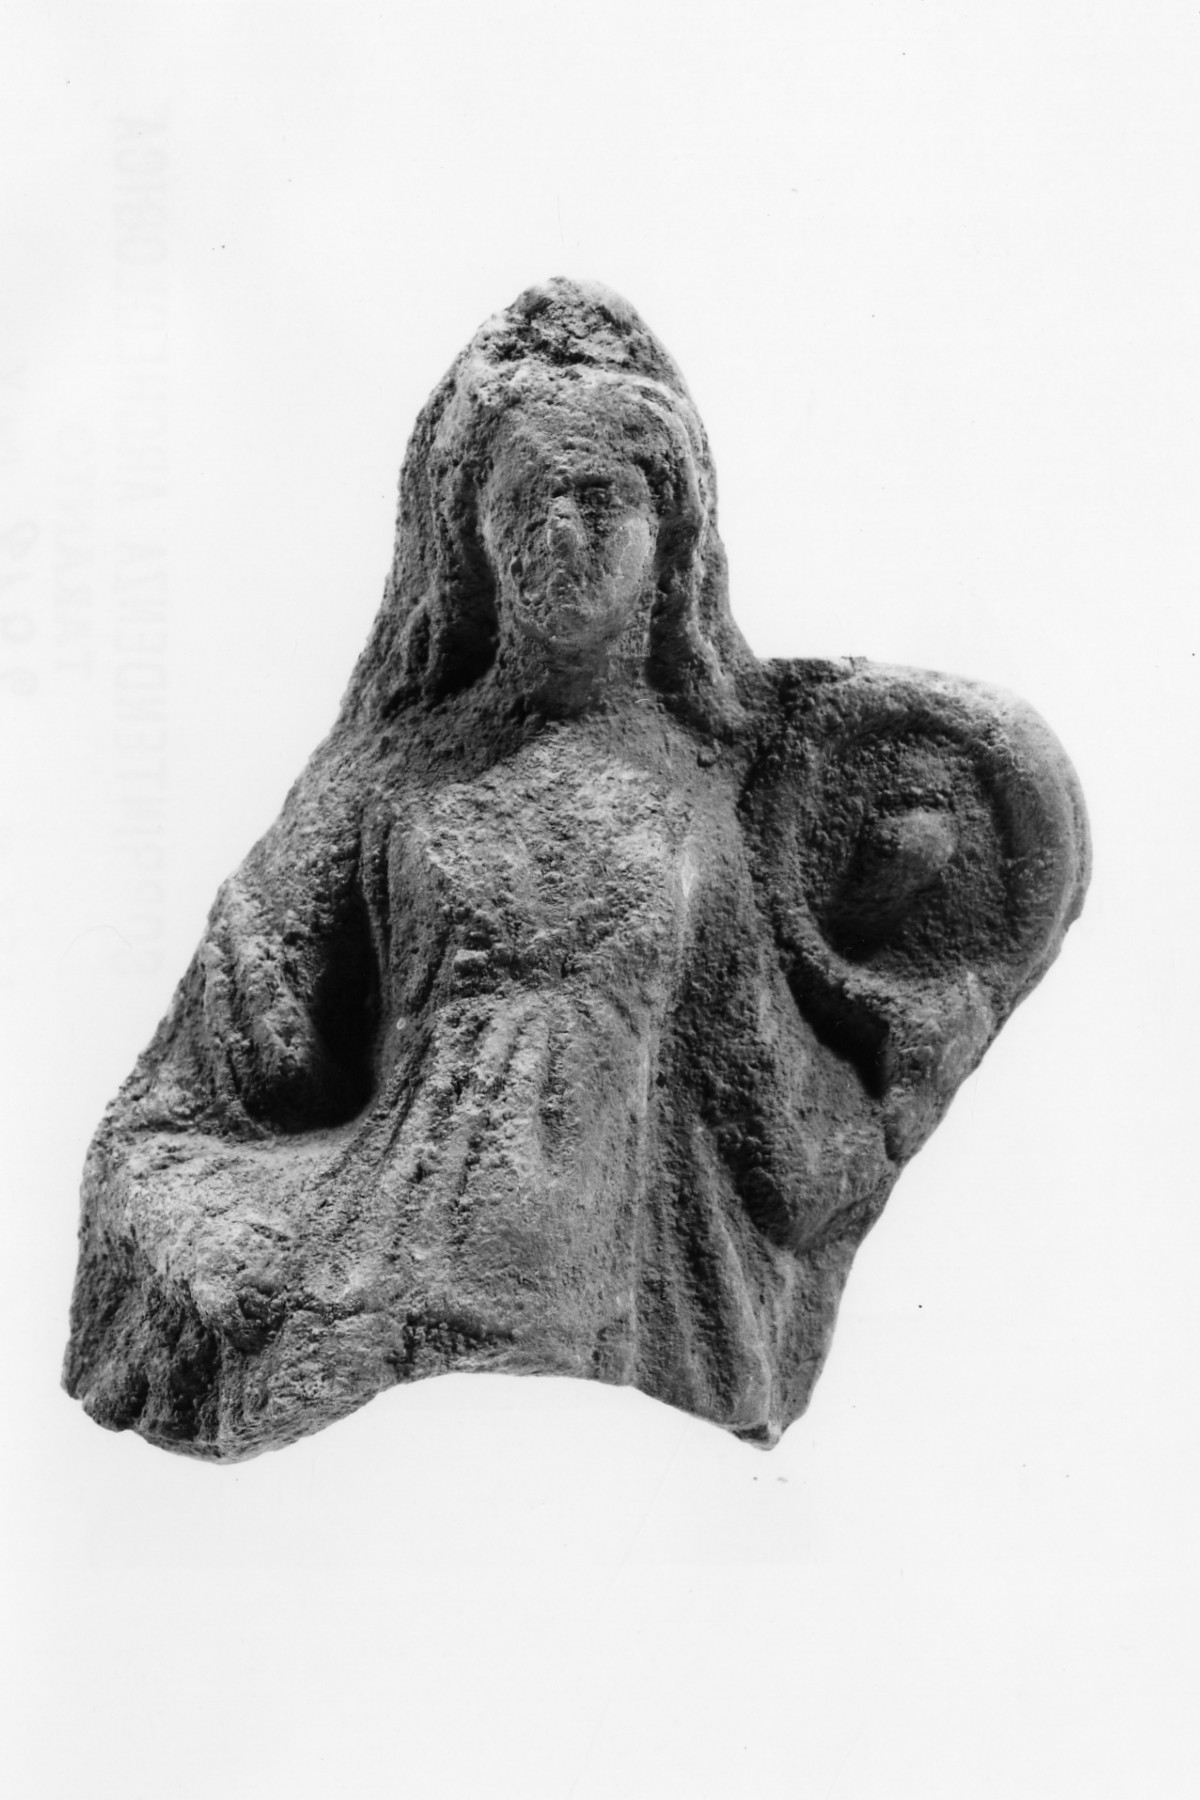 Polyboia (terracotta figurata, culto di Apollo-Hyakinthos) - fabbrica tarantina (secc. IV a.C.-III a.C)